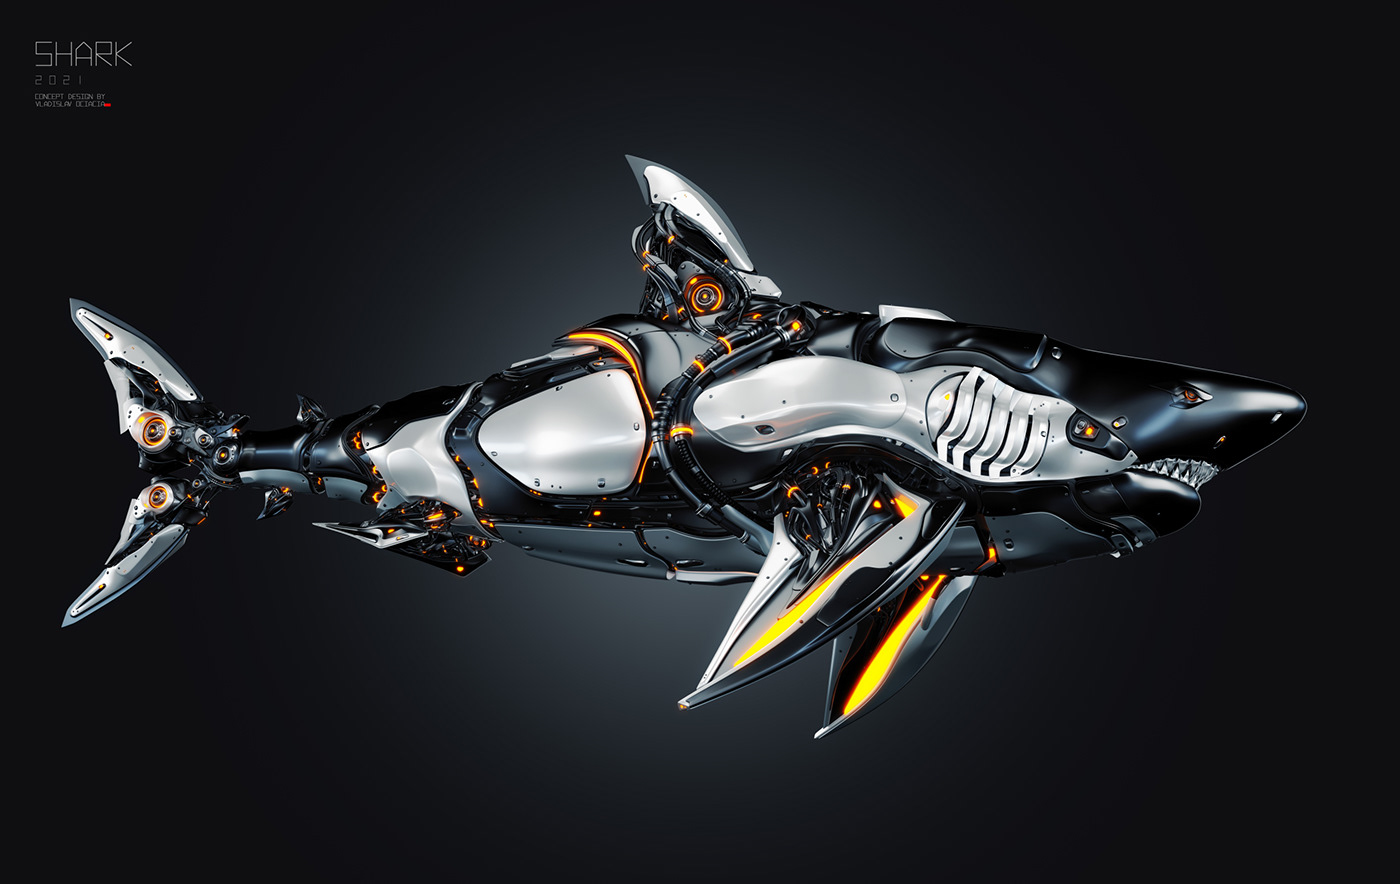 agressive concept art Cyborg fish hunter predator robotic sci-fi shark steel